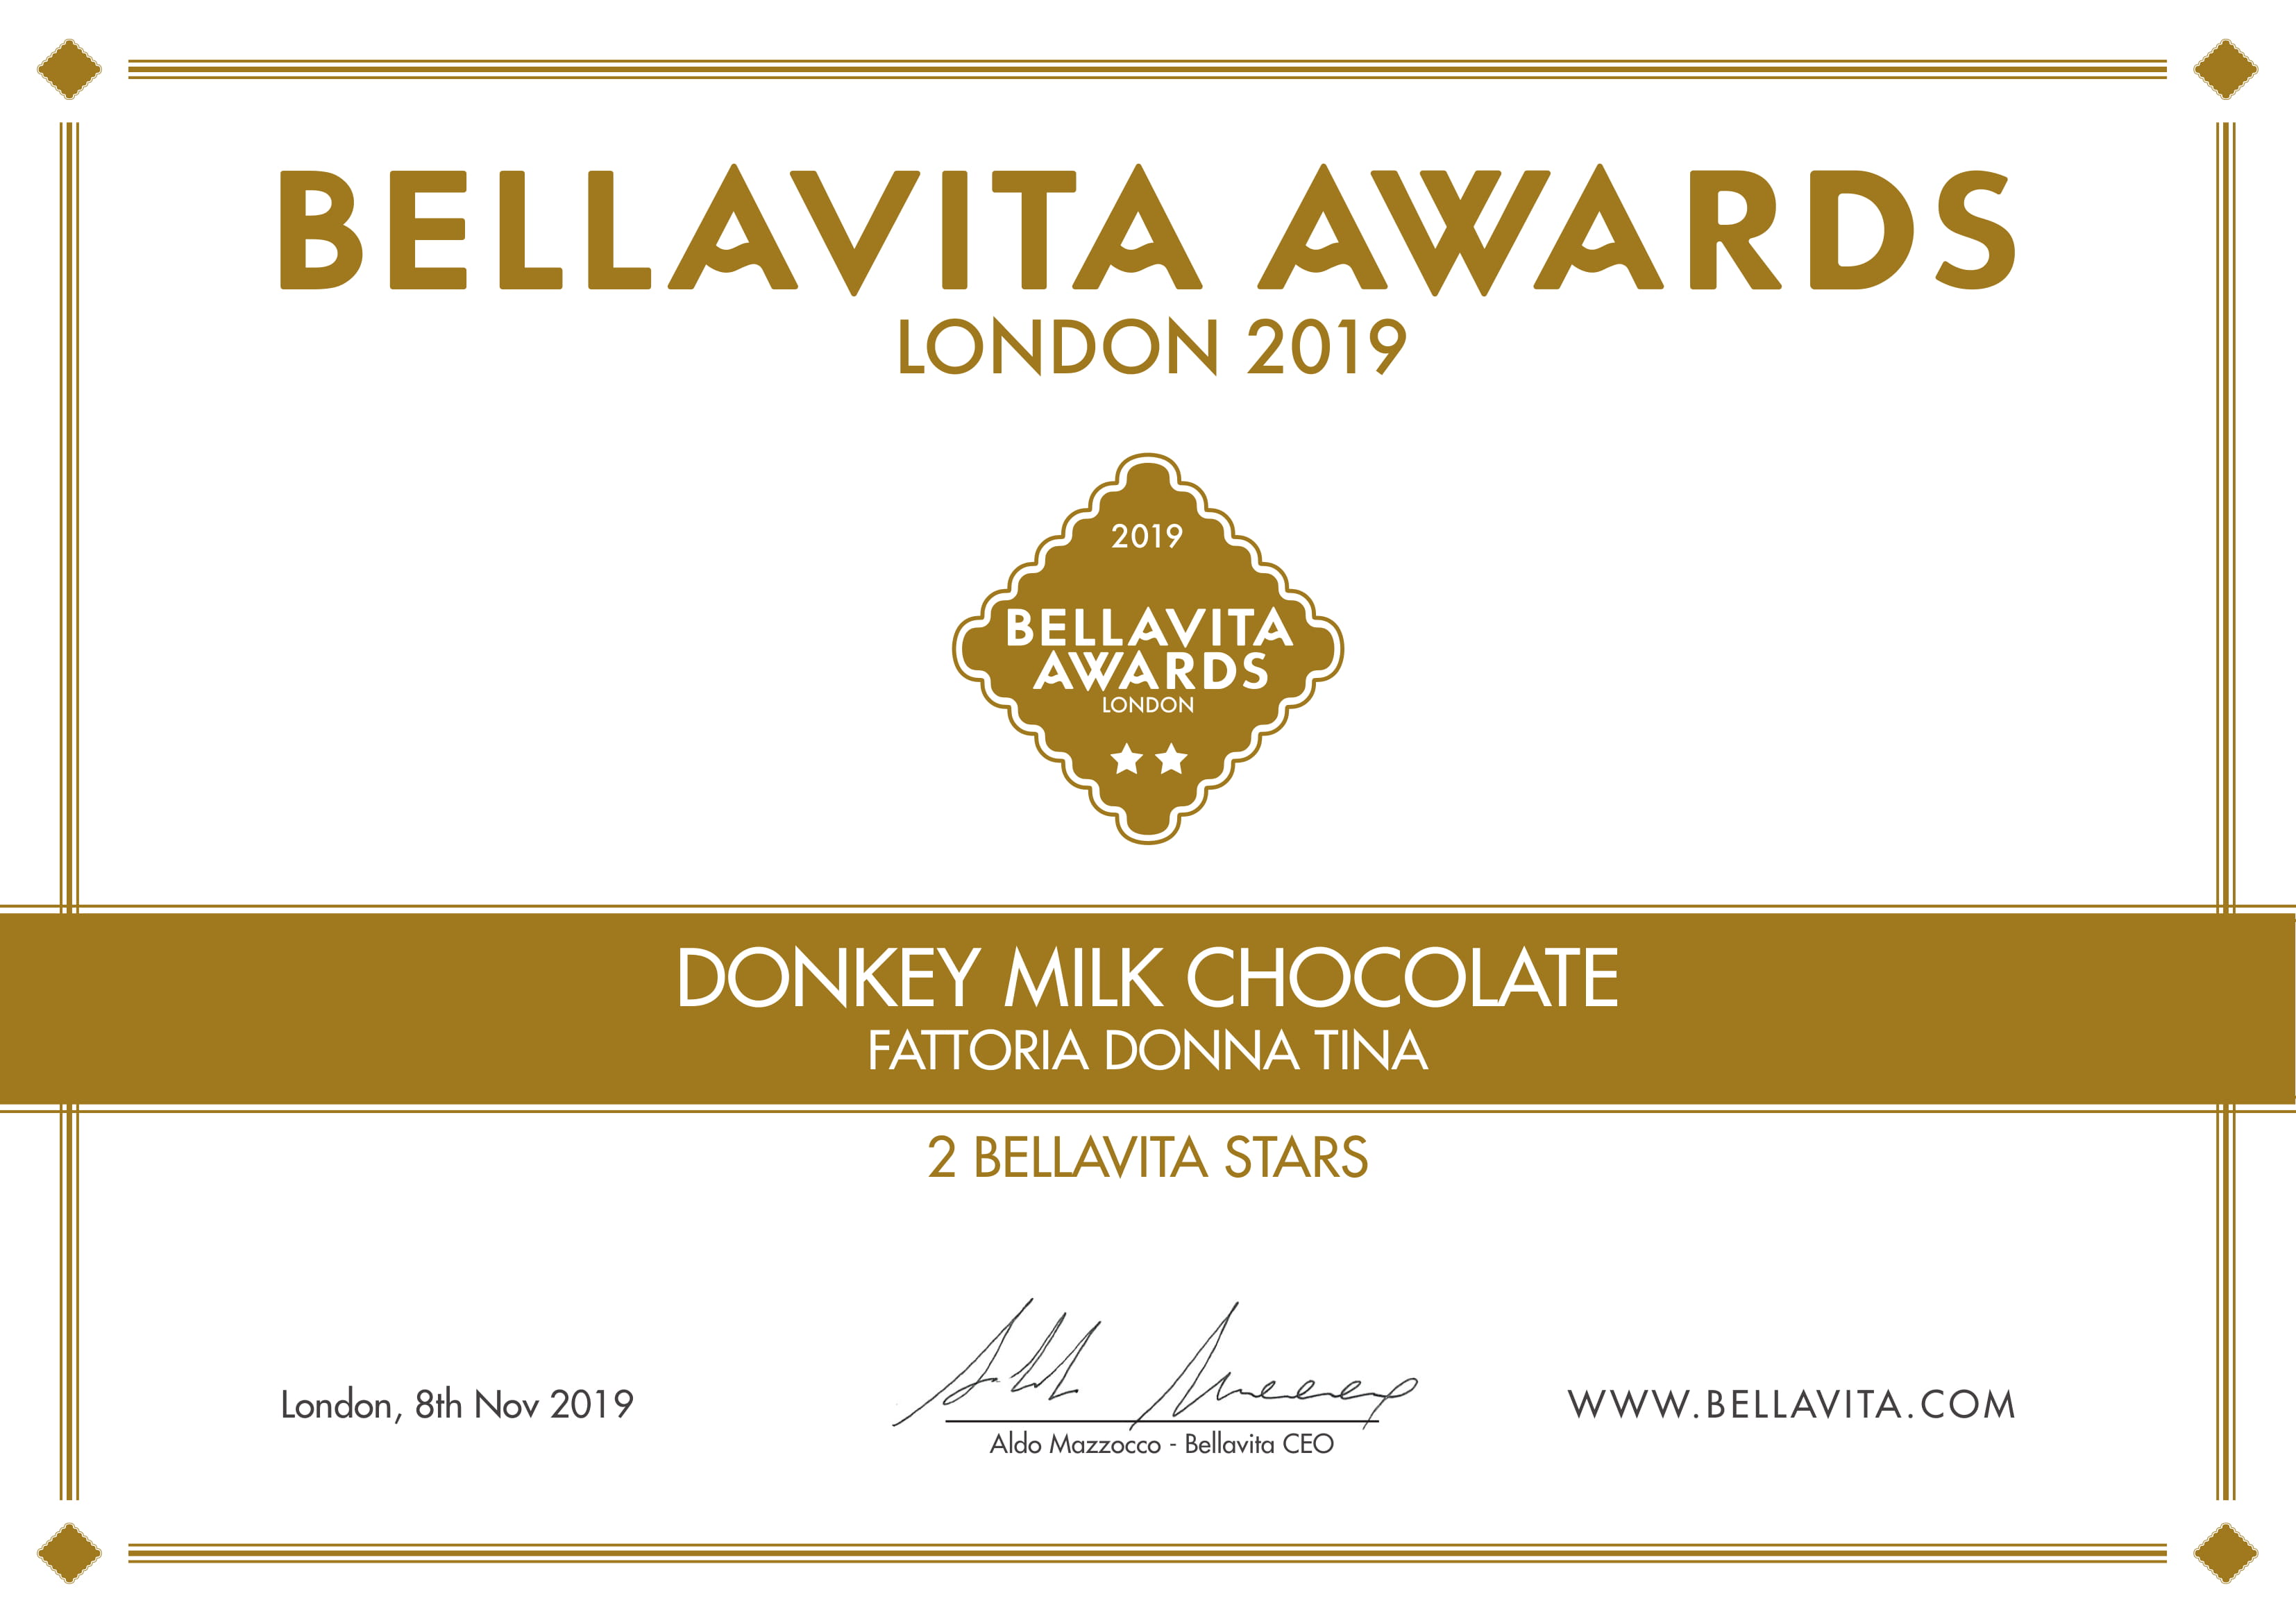 donkey milk chocolate, cioccolata al latte di asina